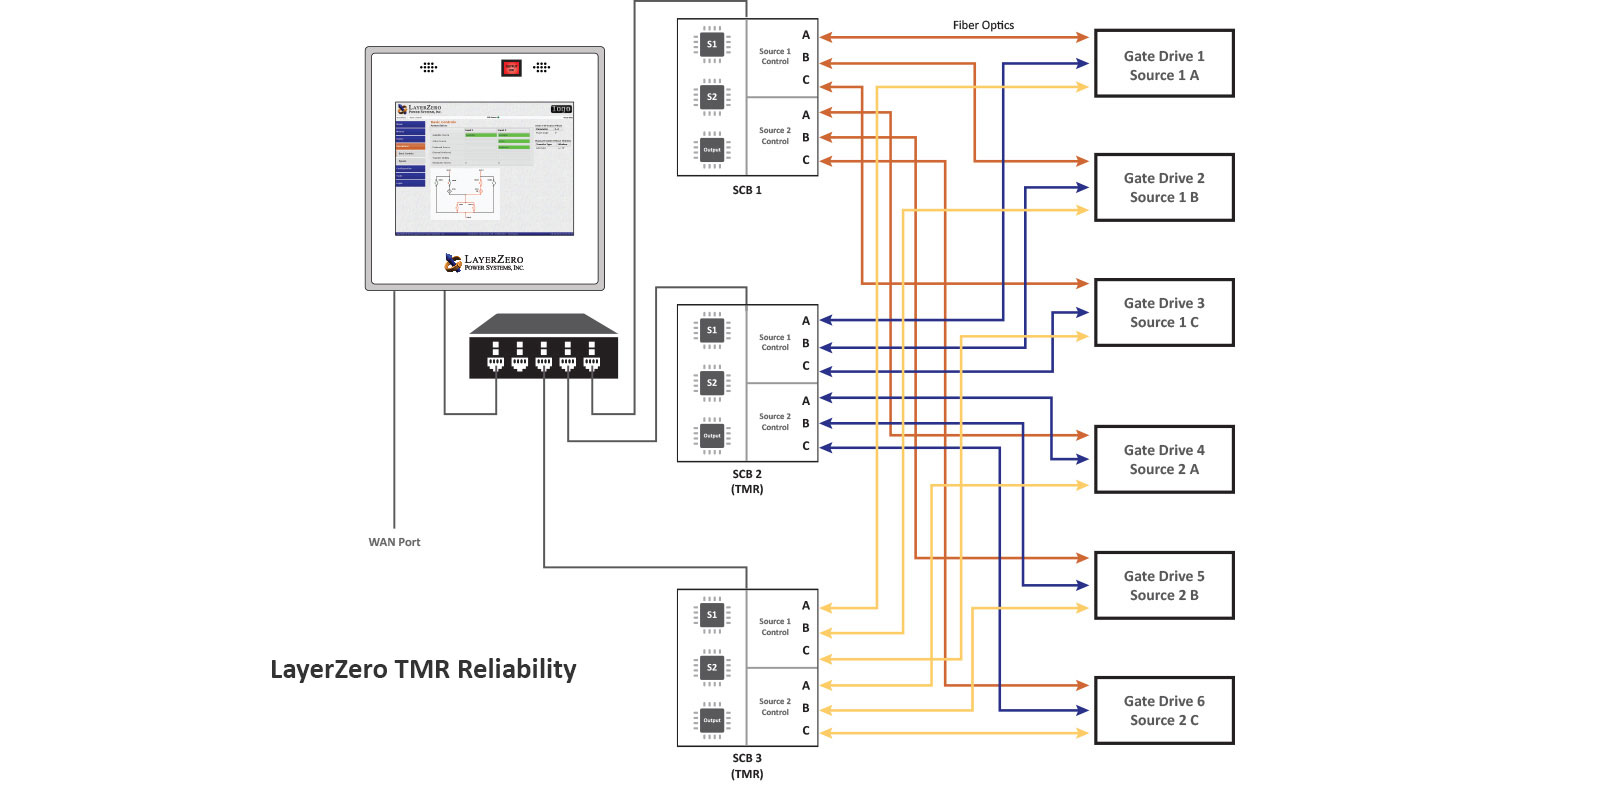 Triple Modular Redundancy Reliability in a Static Transfer Switch